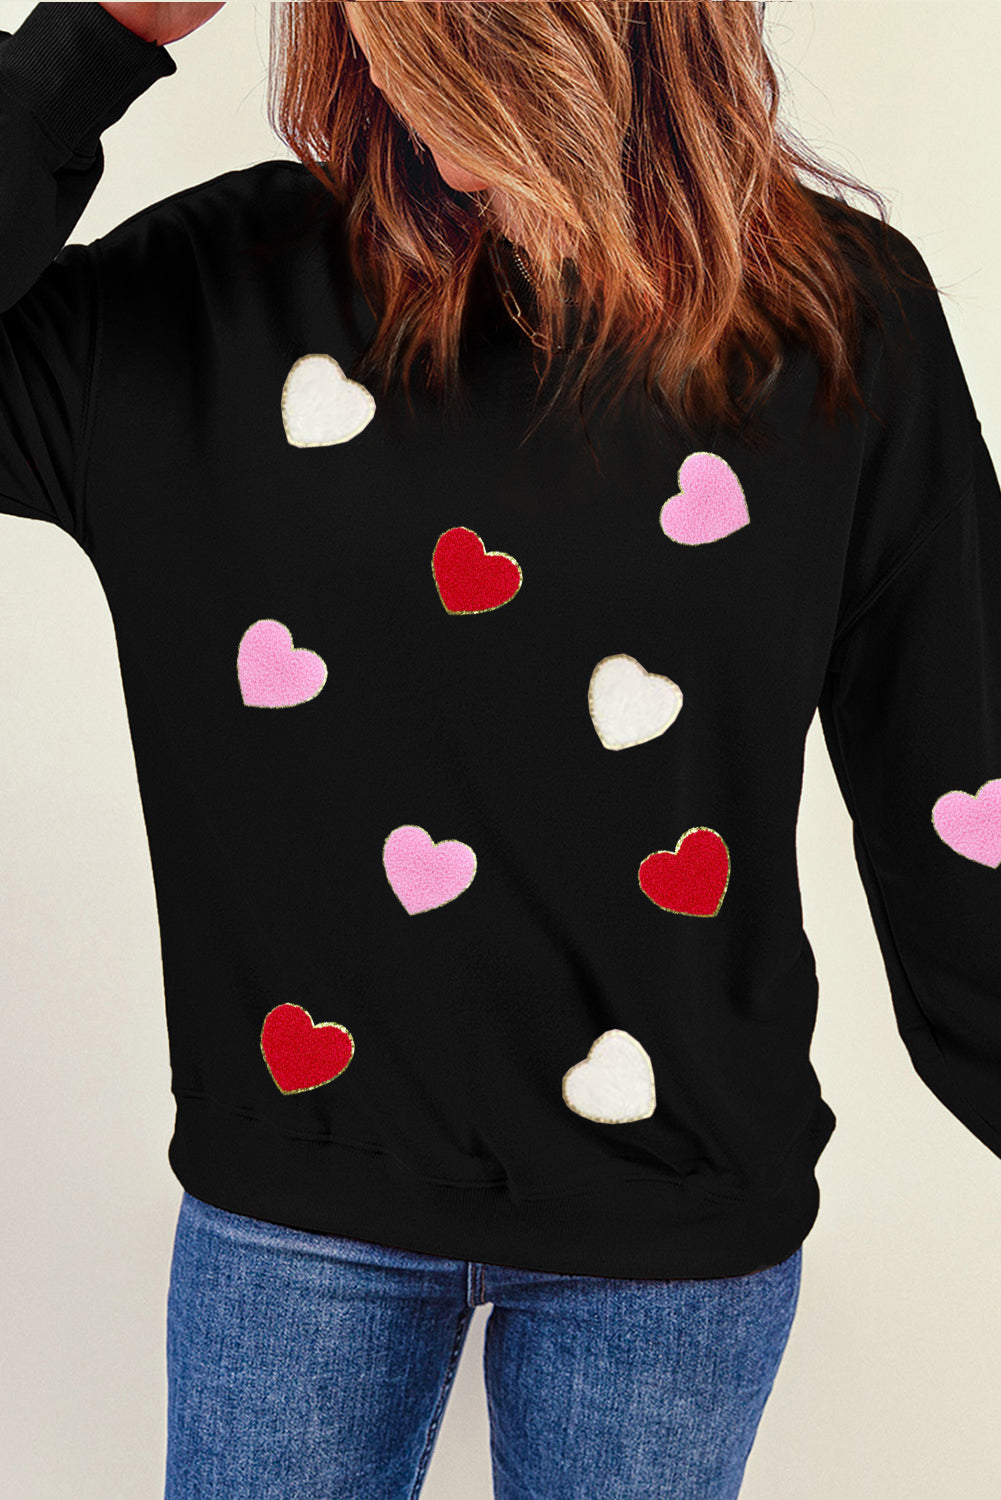 Red Puff XOXO Print Valentines Heart Sweatshirt